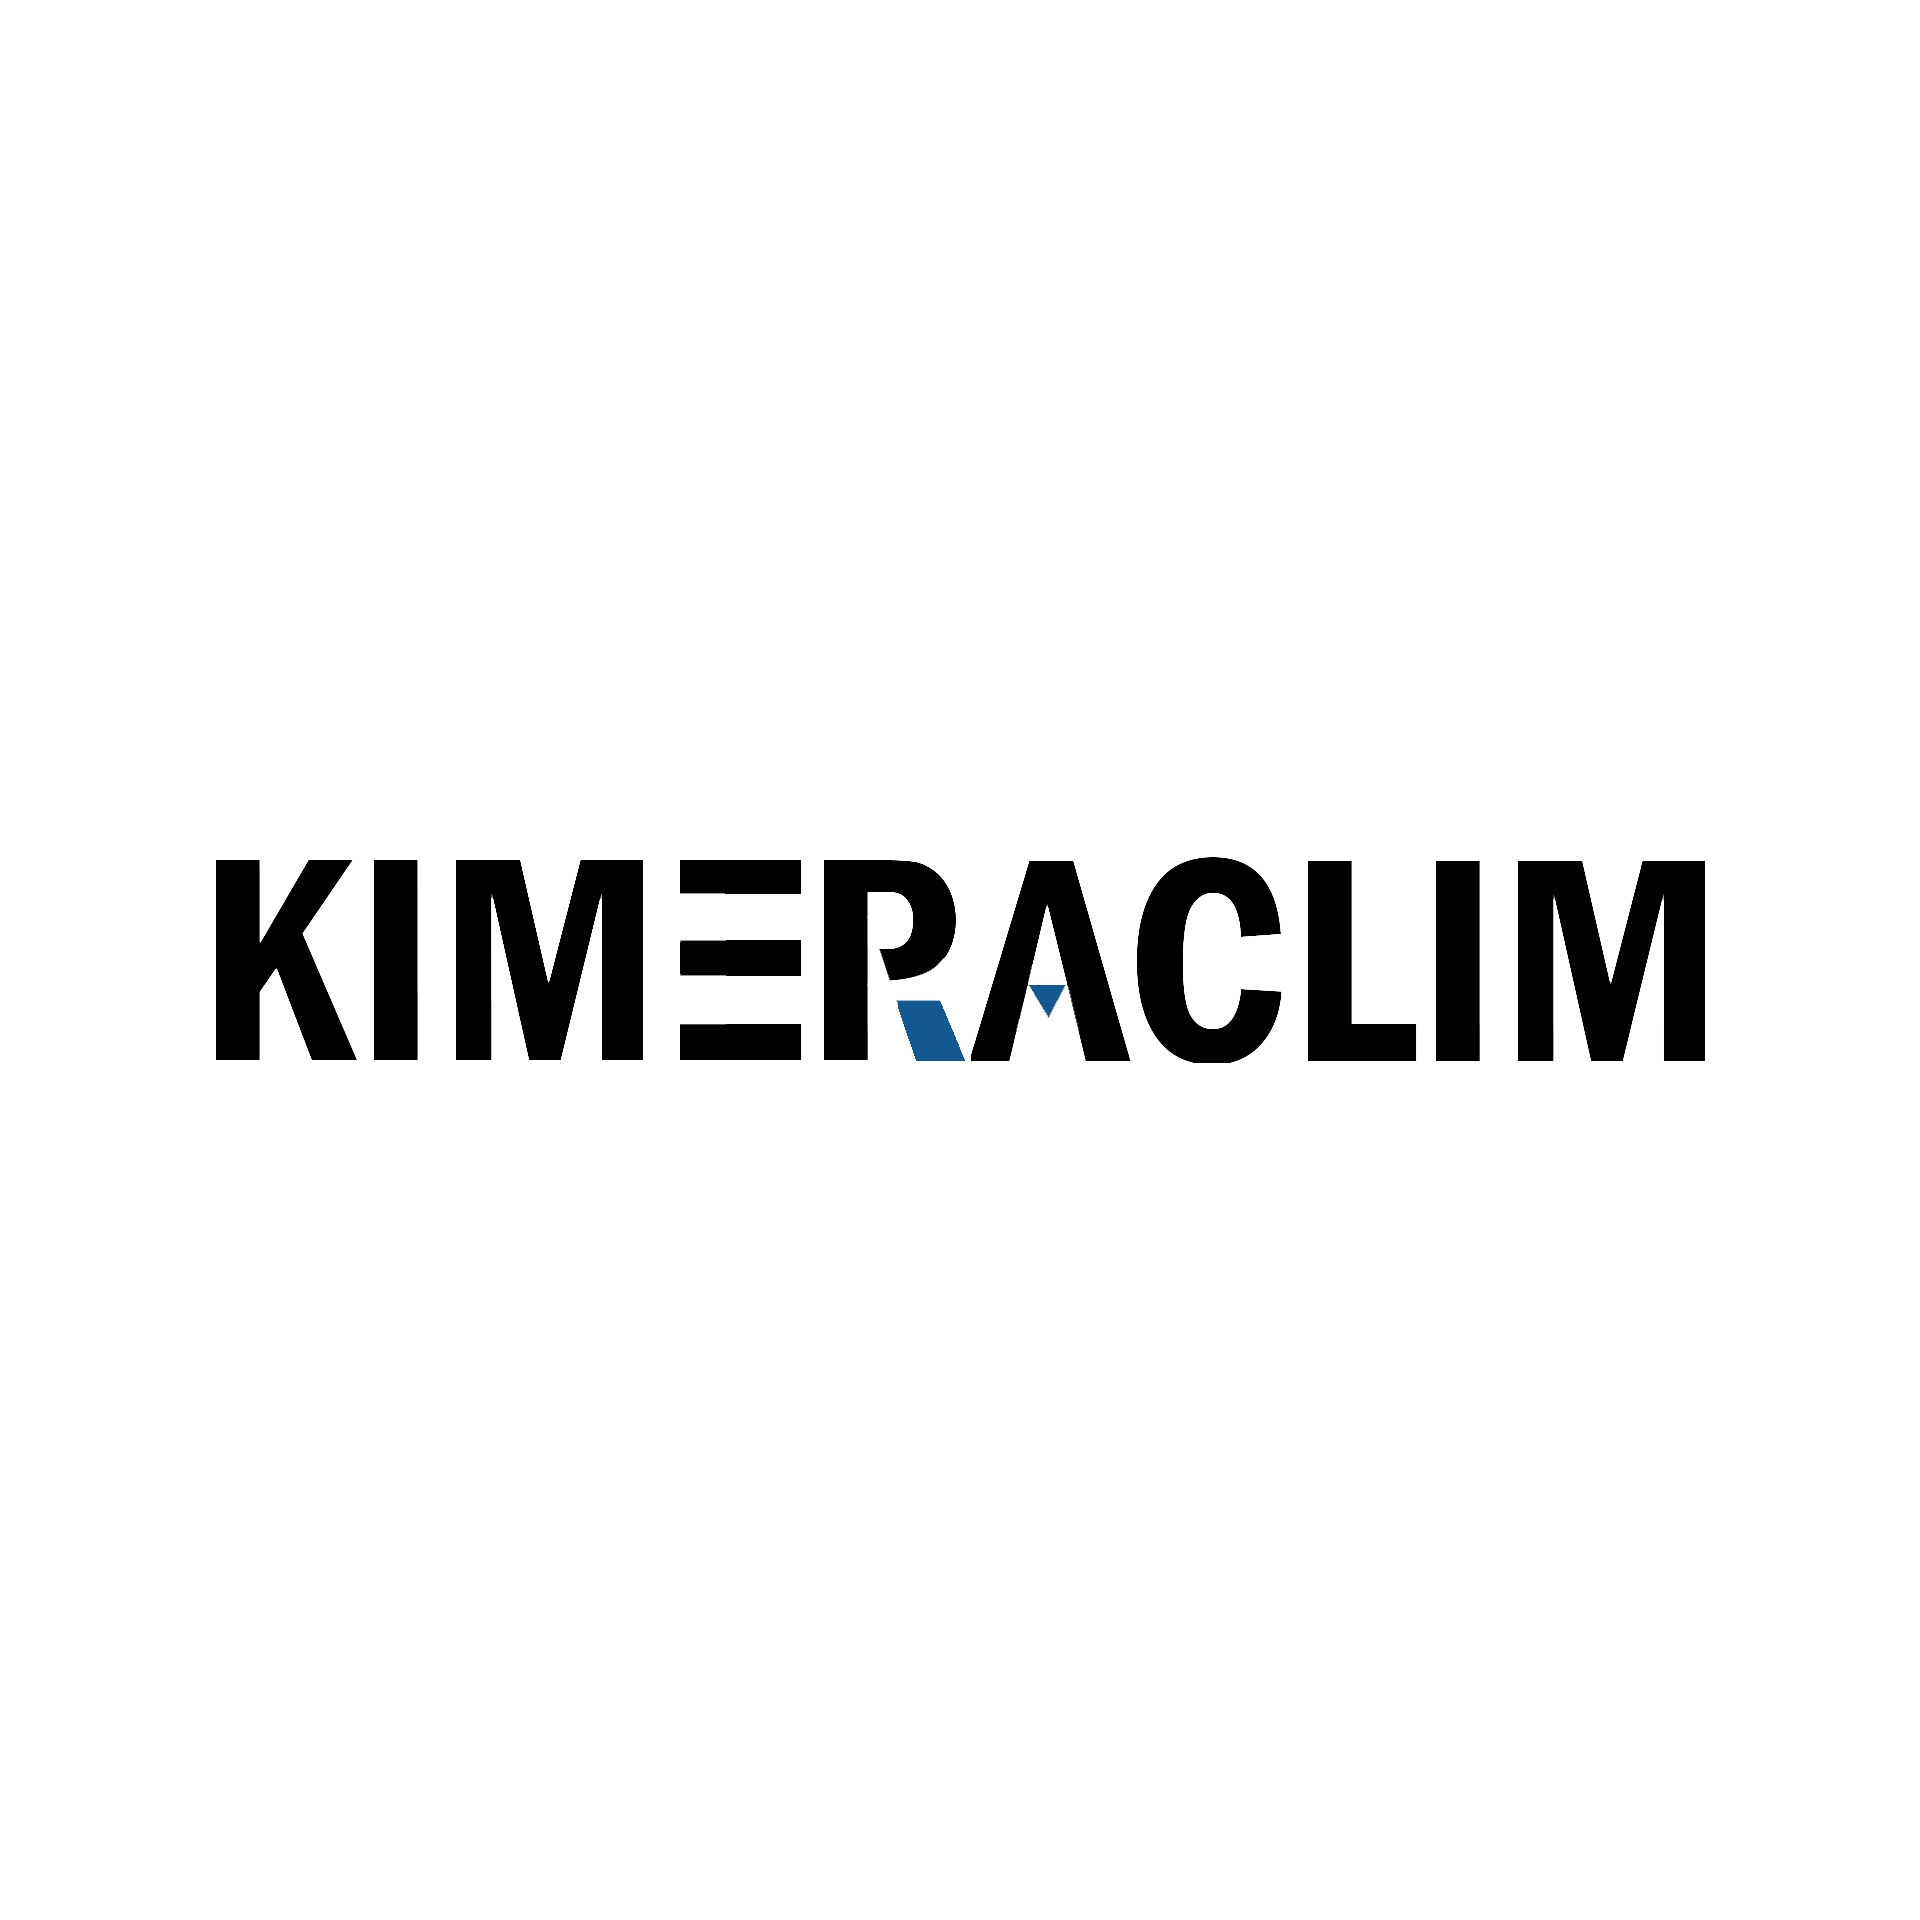 Kimera Climatisation Inc. - Thermopompe, Chauffage, Air climatisé Logo